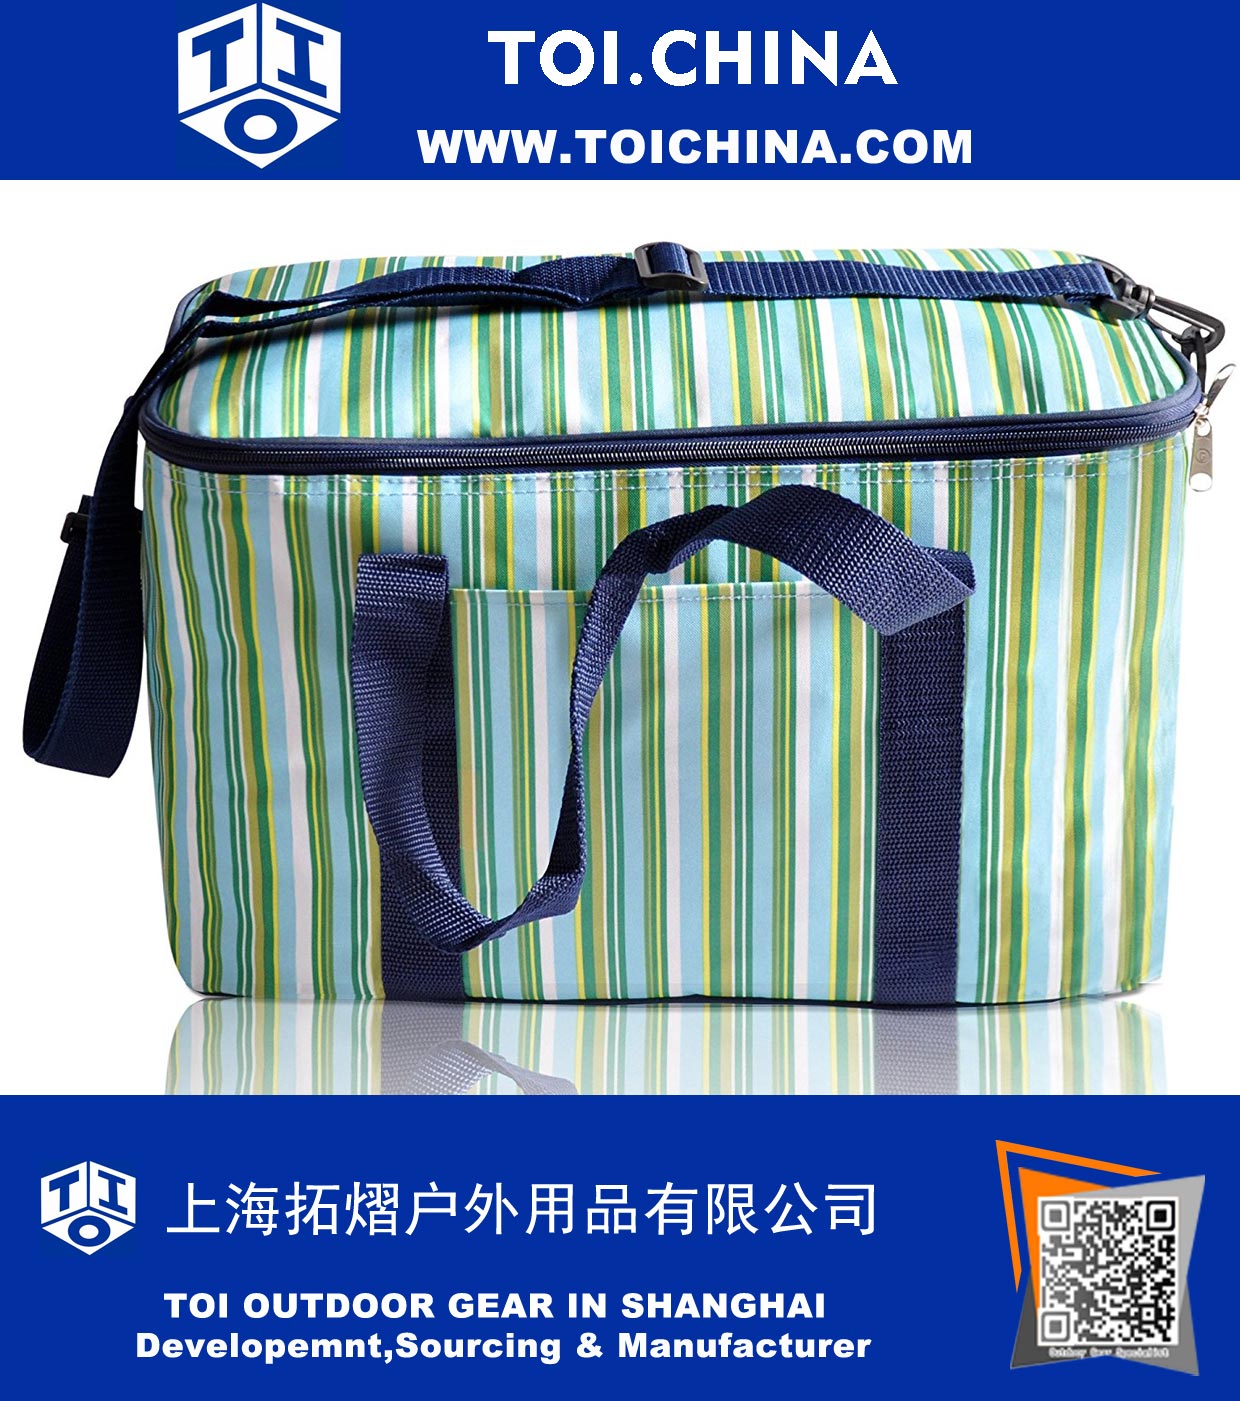 36 Can Large Picnic Cooler Bag Lunch Bag